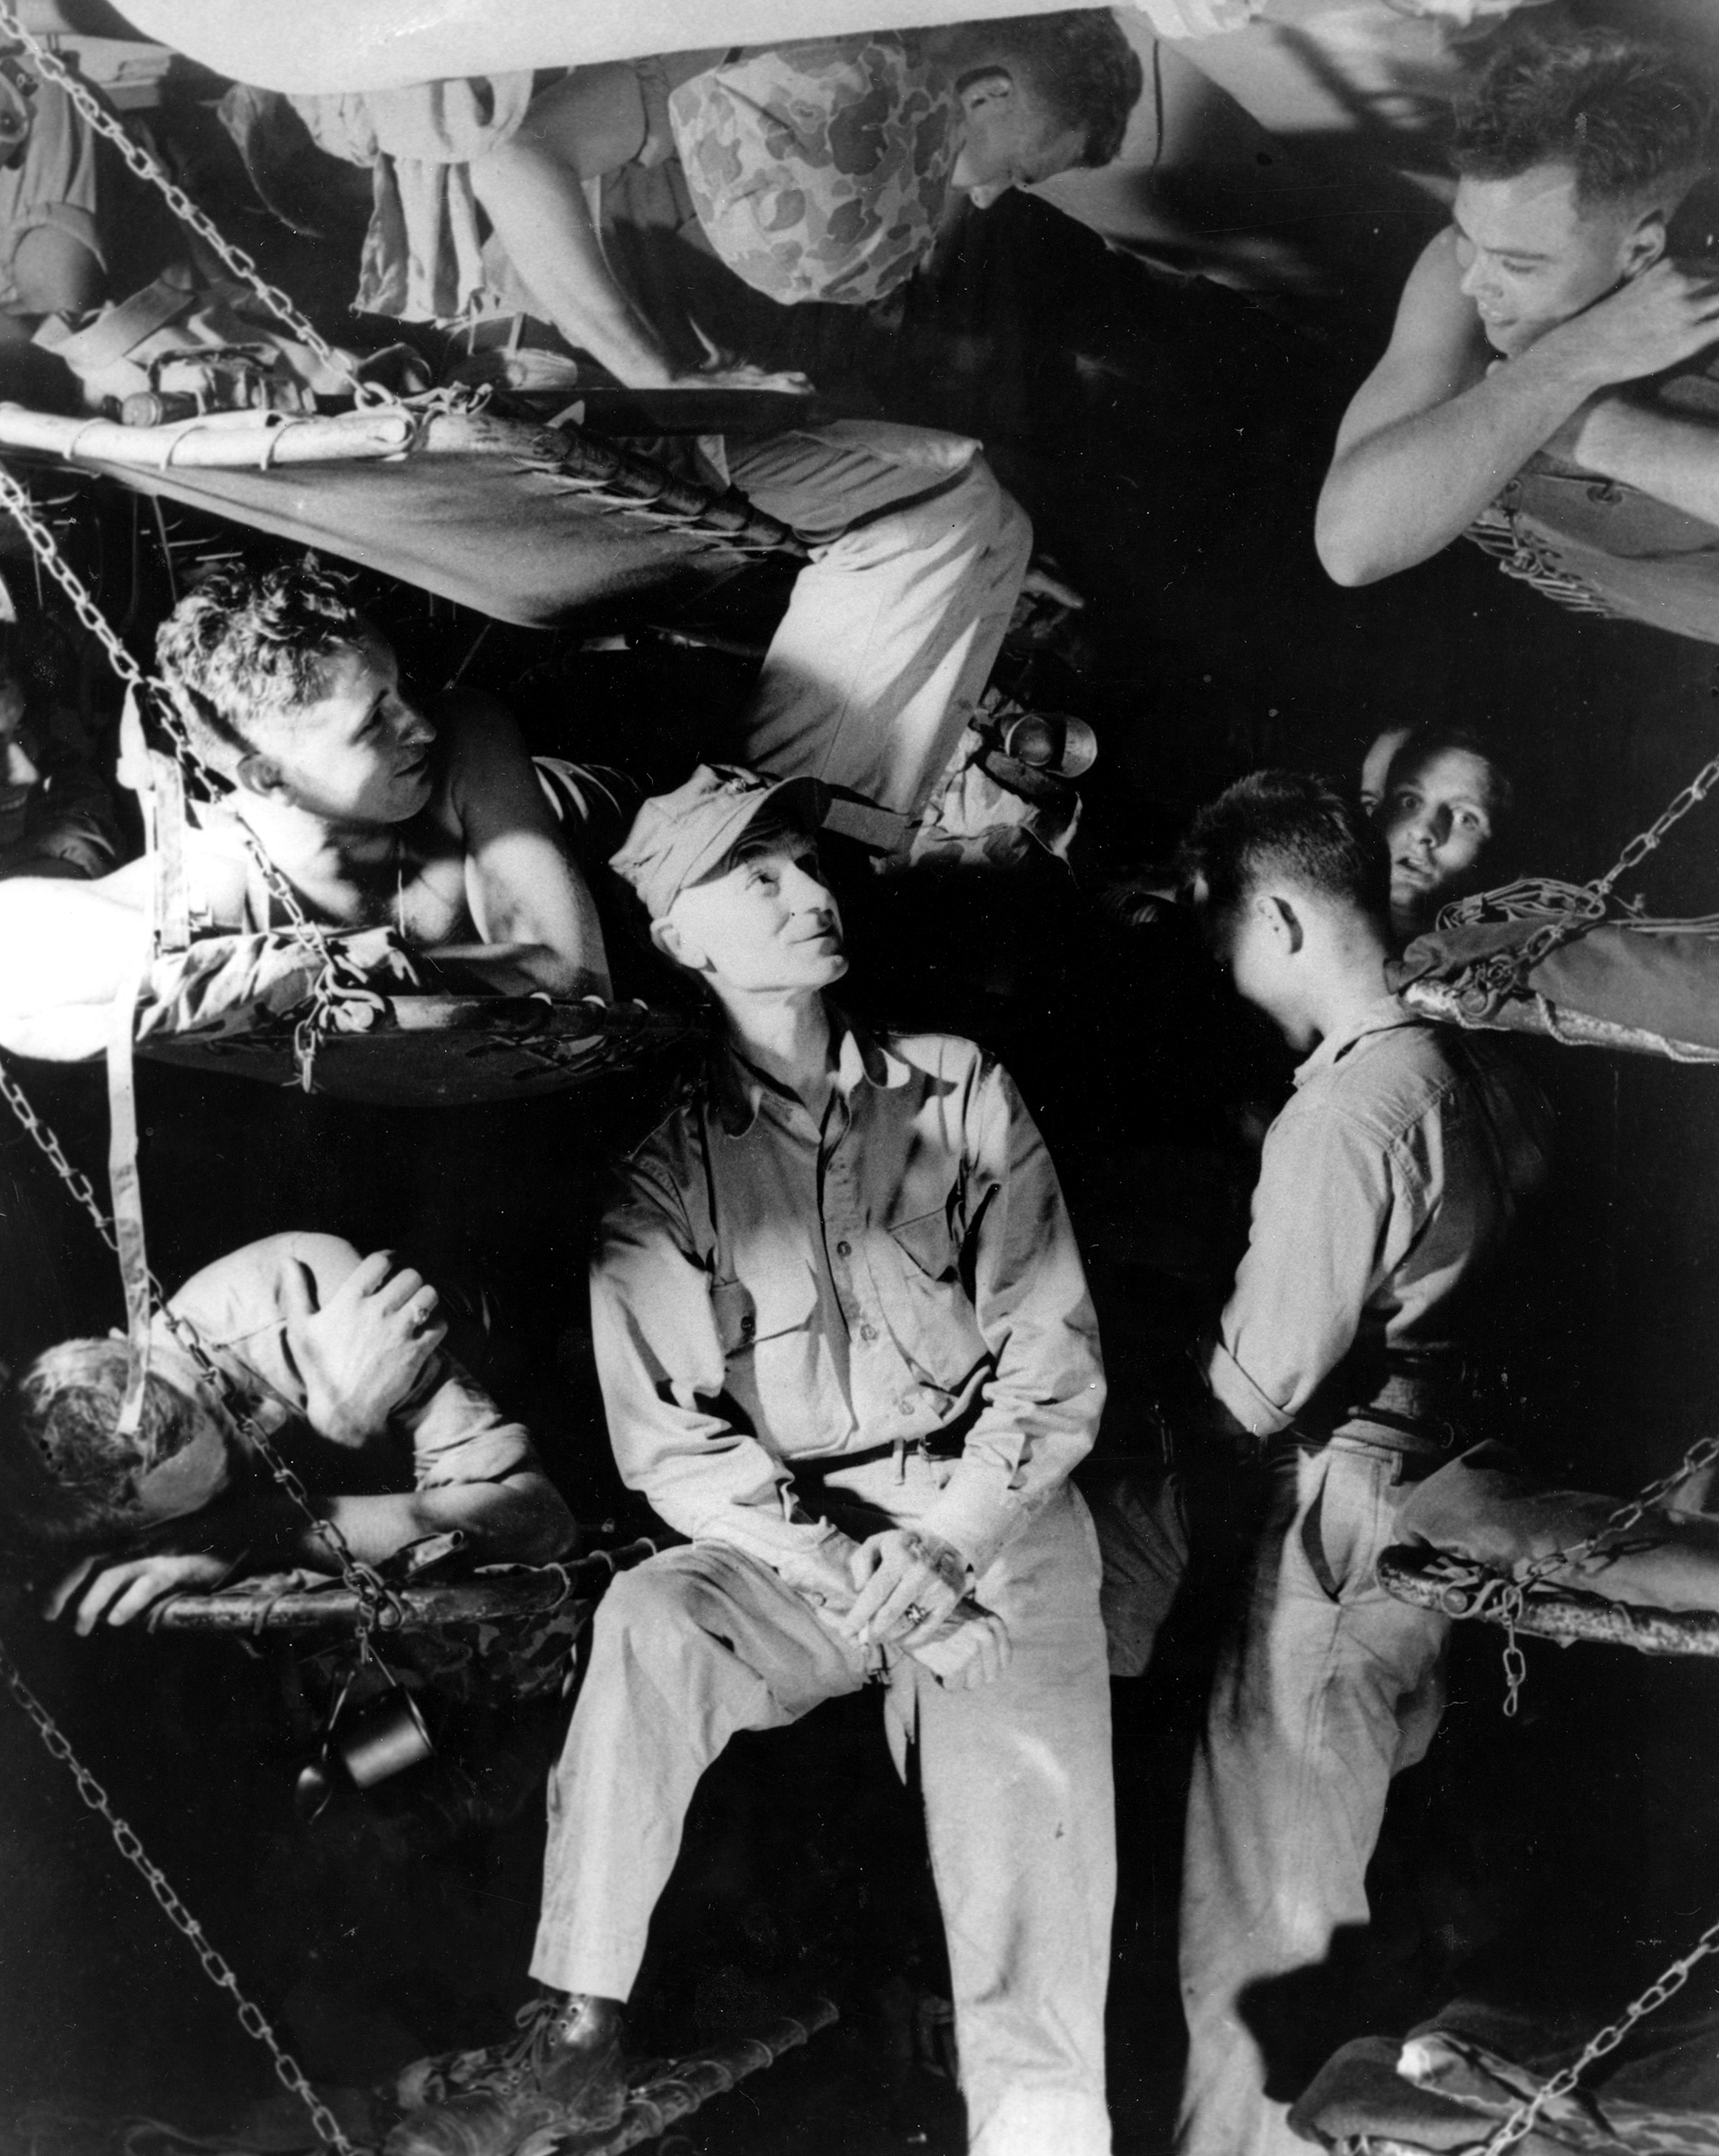 U.S. war correspondent Ernie Pyle, center, Ernie Pyle, center, talks with Marines on a Navy transport en route to Okinawa in 1945 during World War II